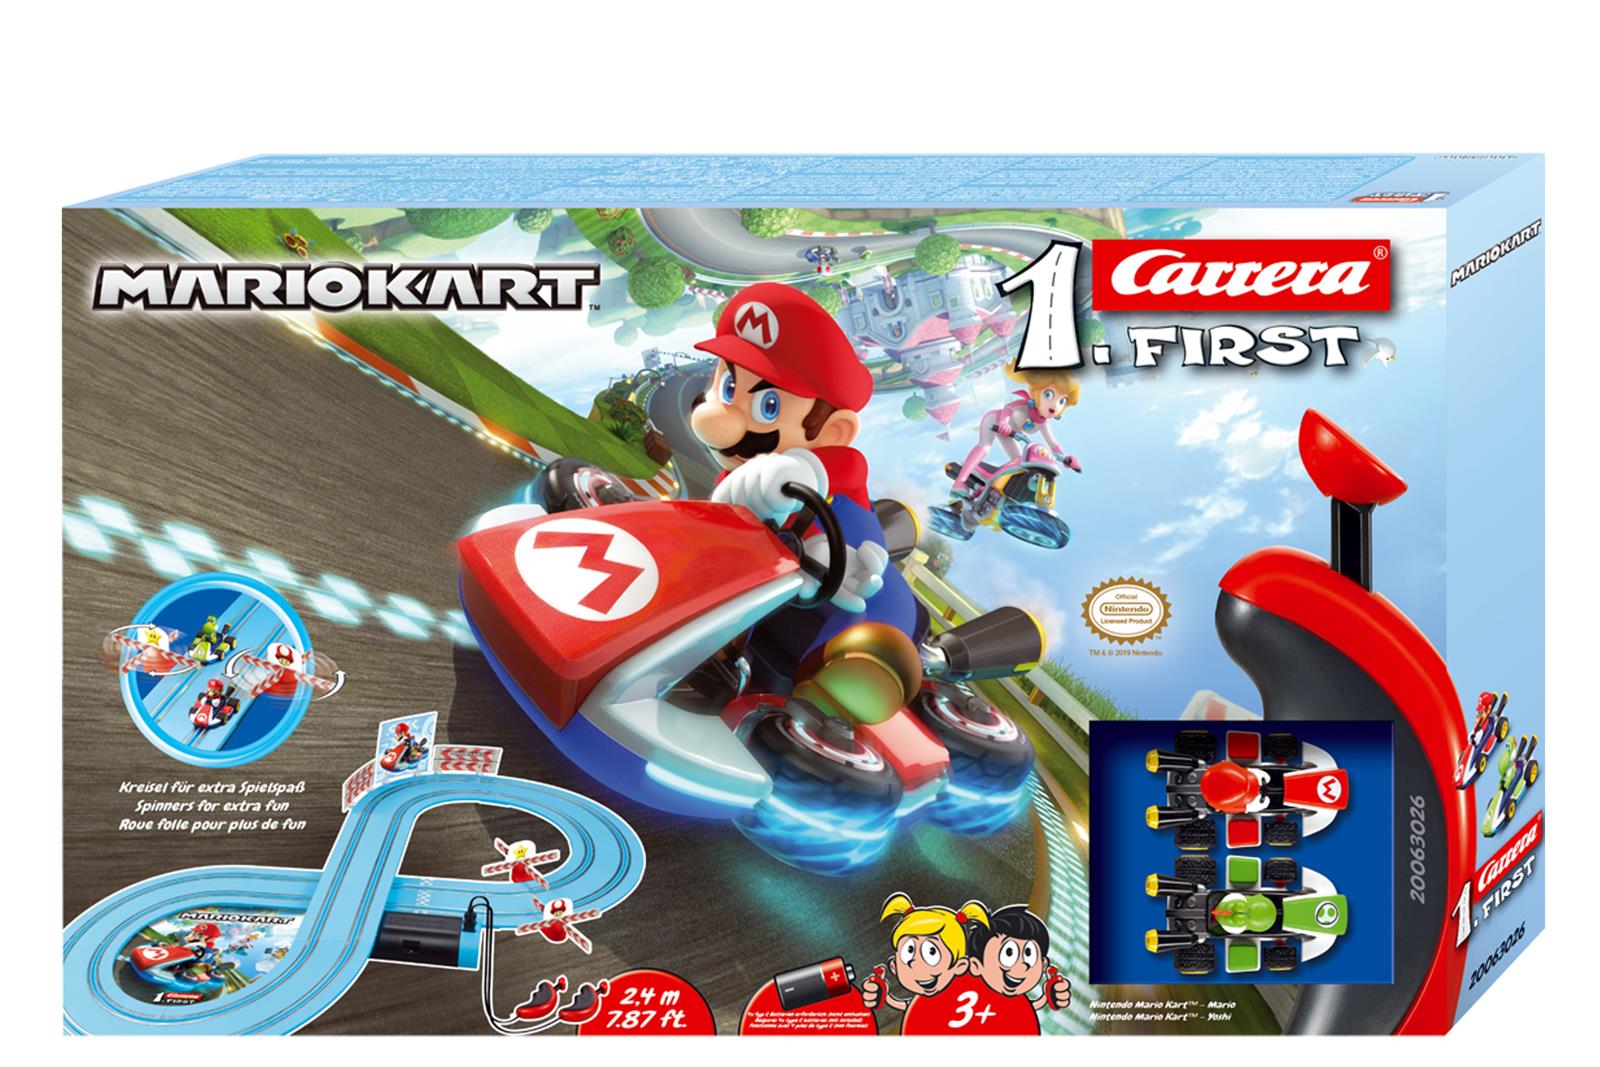 Carrera First Nintendo Mario